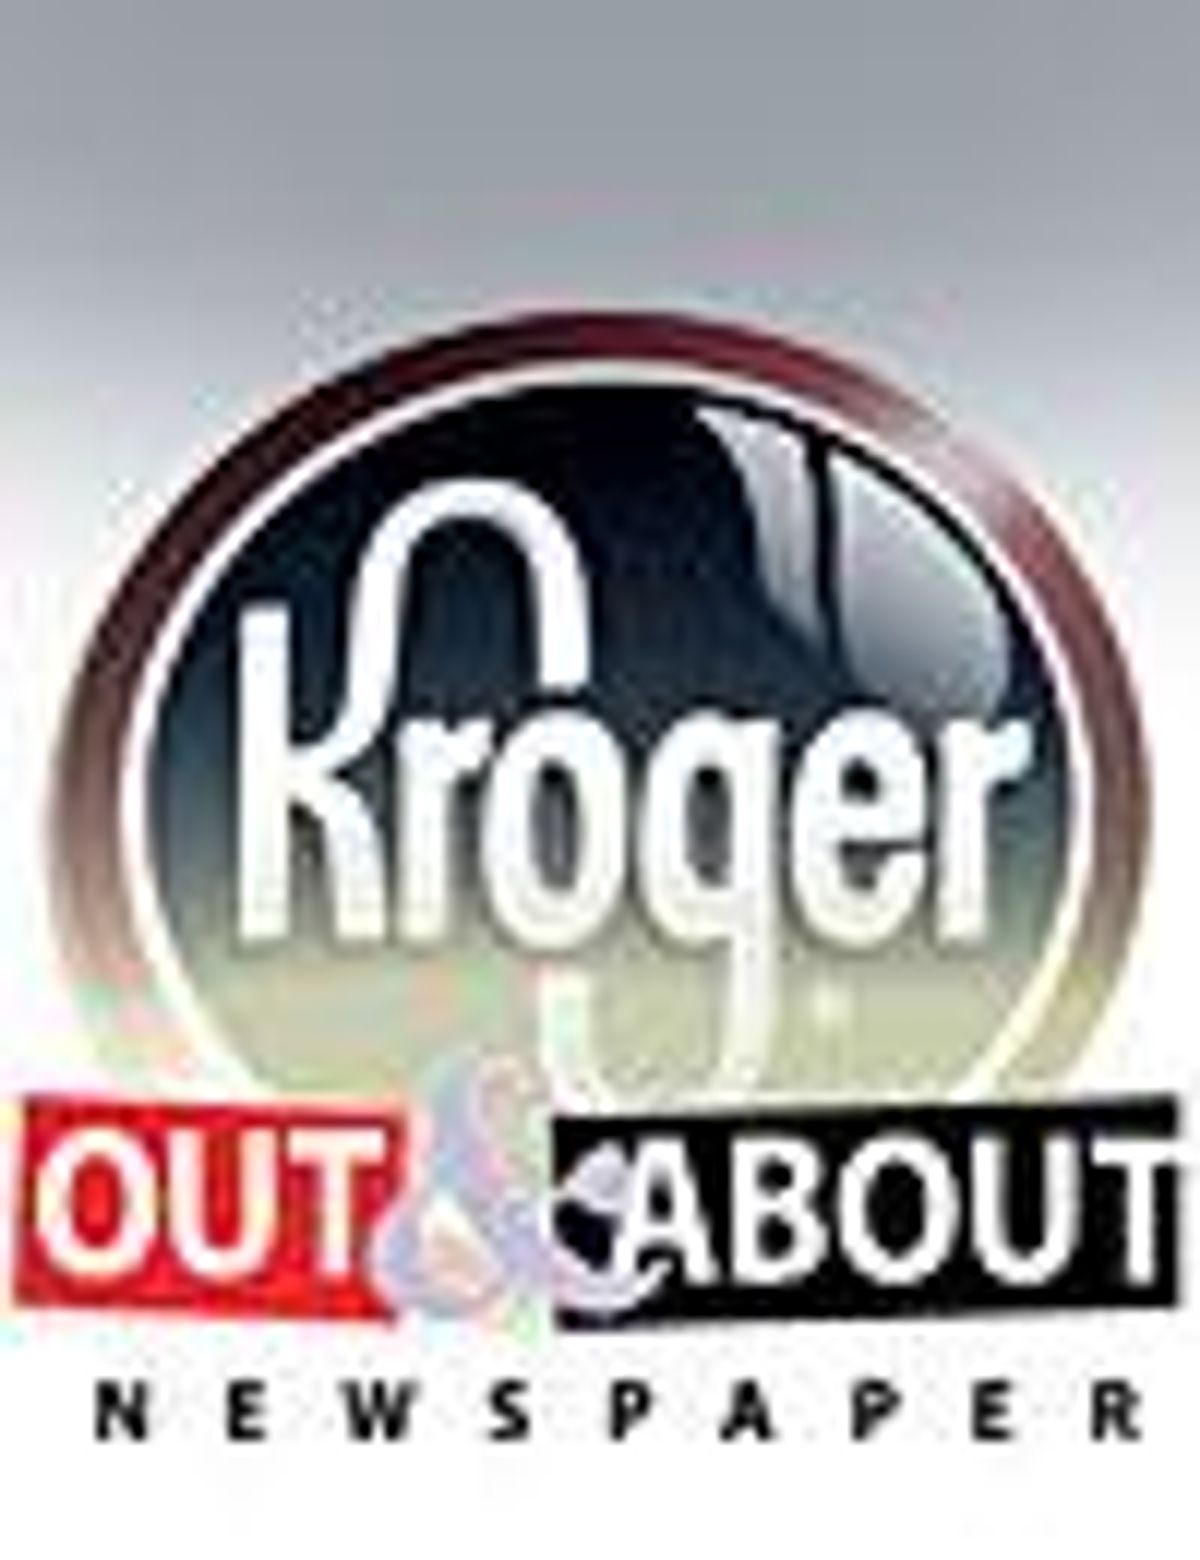 Kroger_outandabout